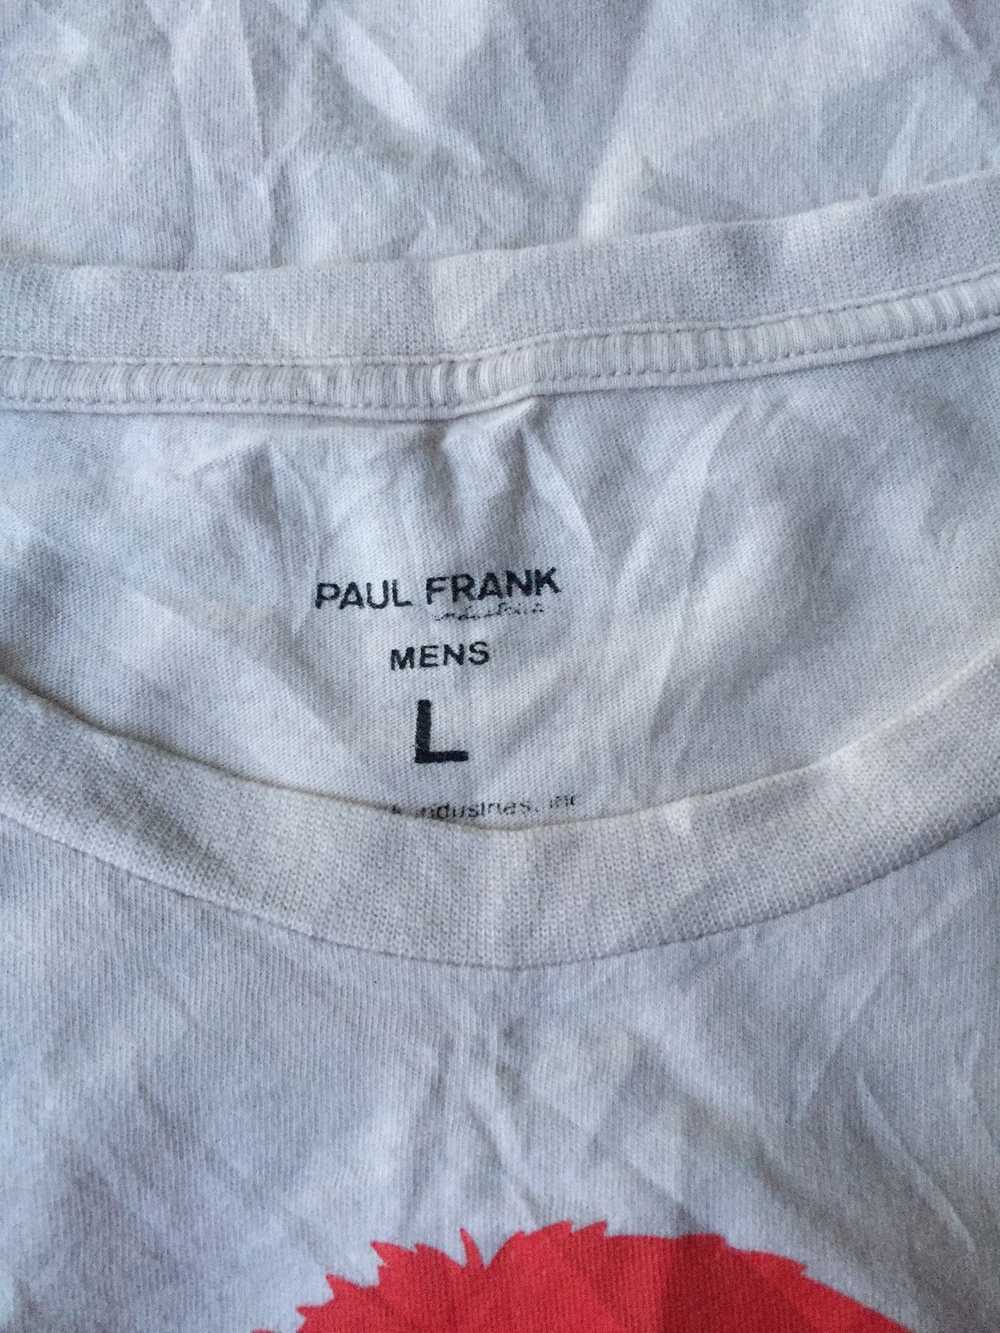 Band Tees × Paul Frank × Streetwear ❗️Rare❗️Paul … - image 4